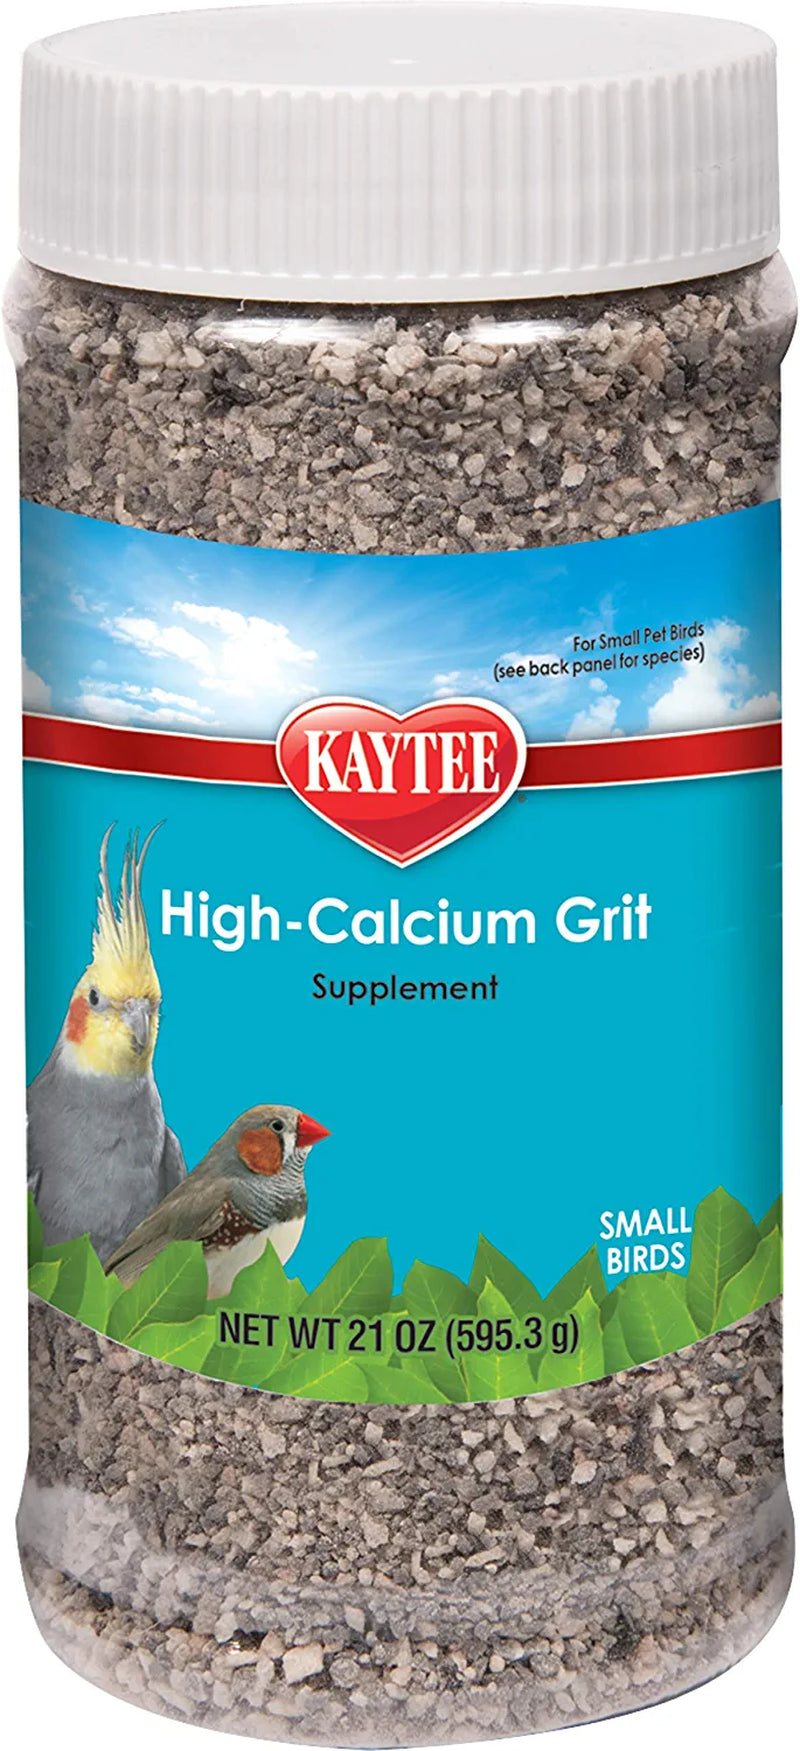 Kaytee Forti-Diet Pro Health Hi-Calcium Grit for Small Birds, 21-Oz Jar